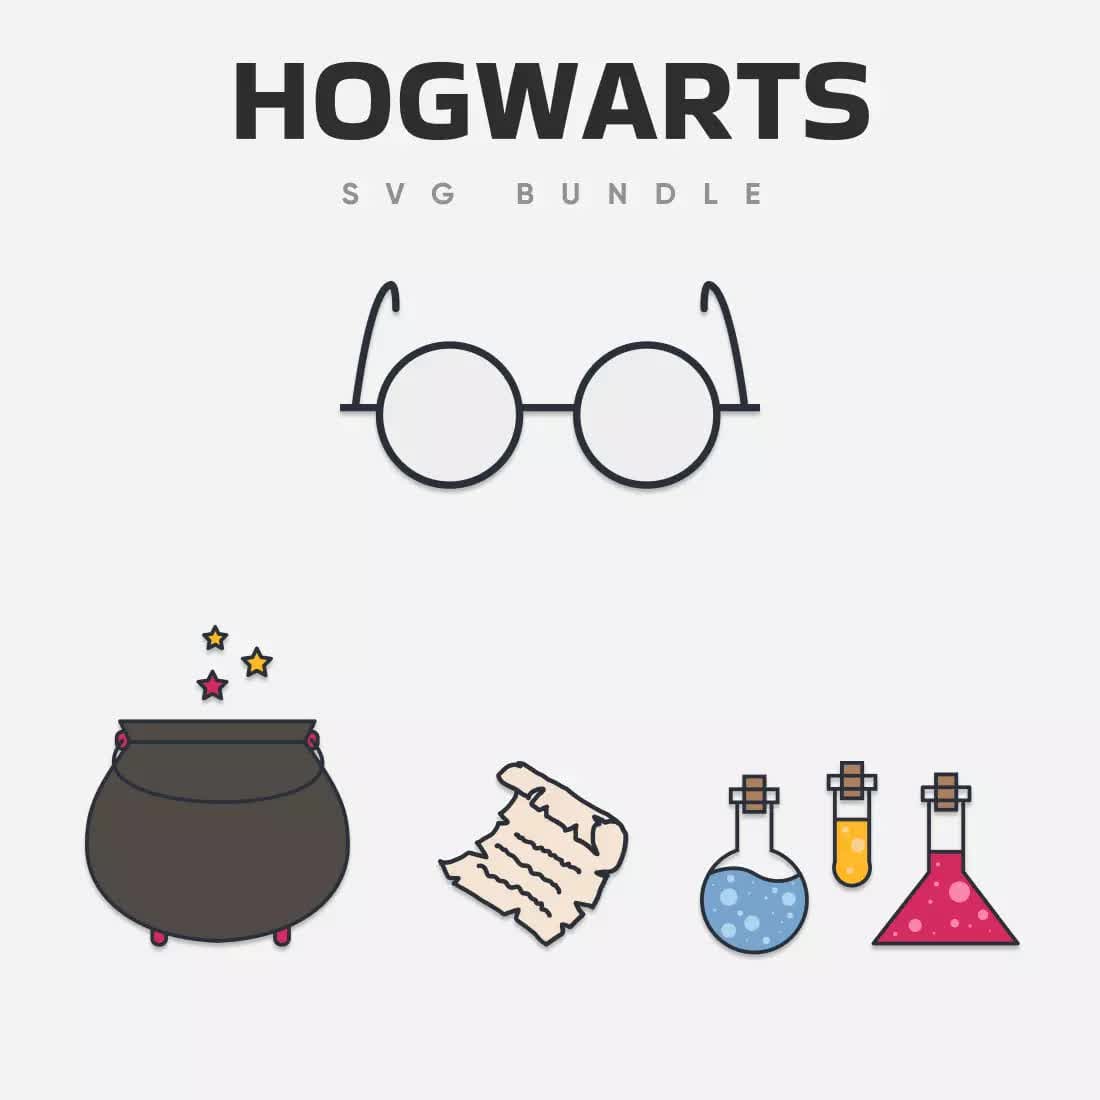 Harry Potter SVG Bundle Preview 2.